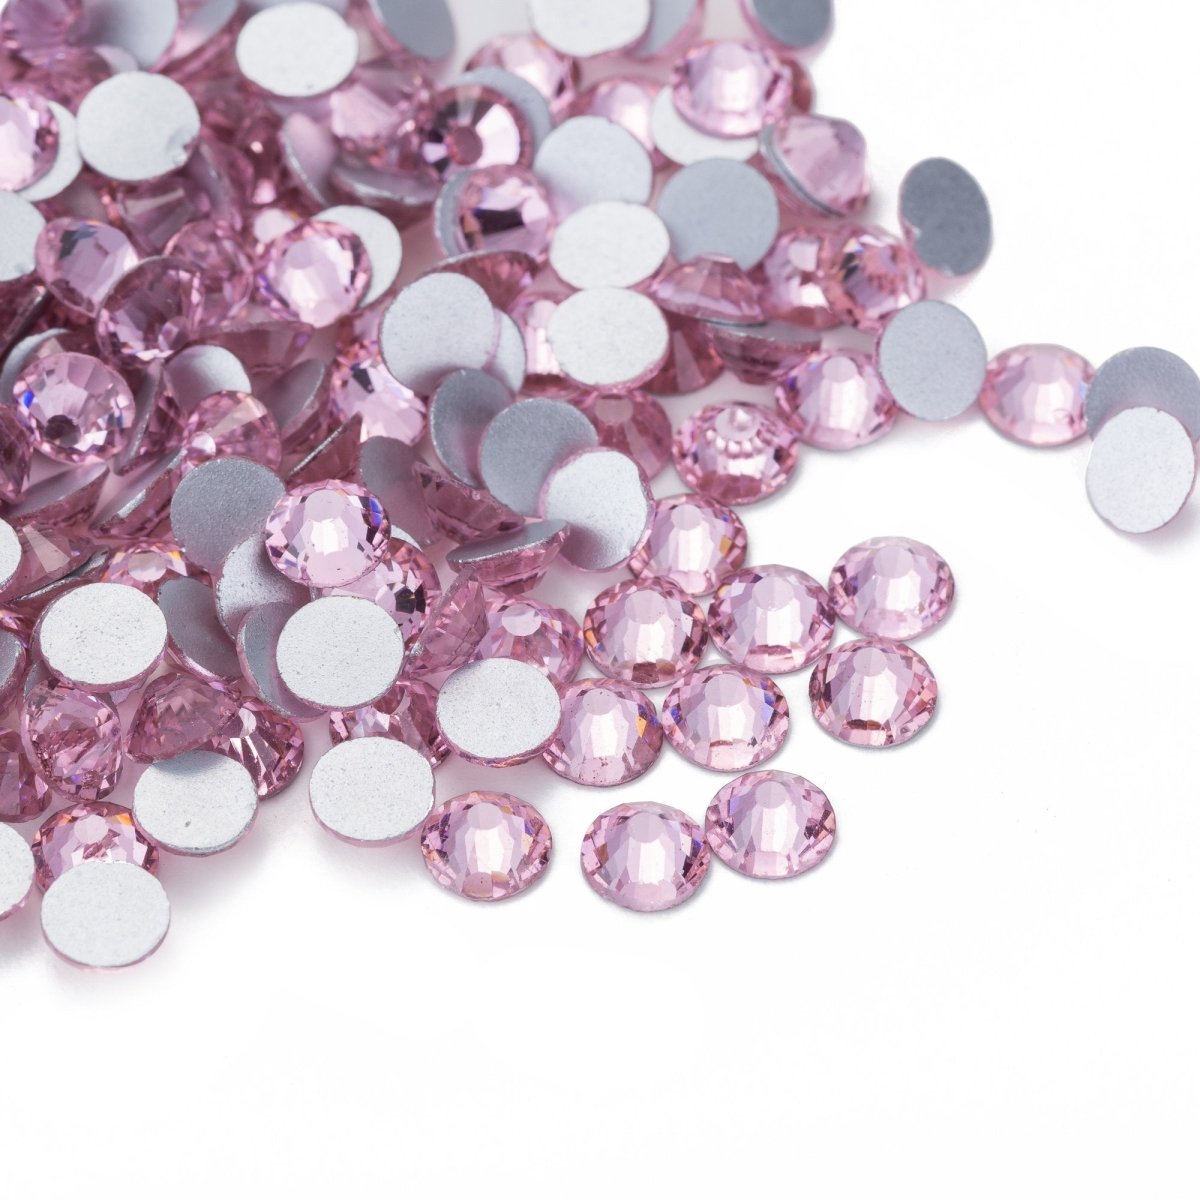 288 pcs High Quality Crystal Light Rose Light Pink Rhinestones Loose wholesale Crystal flat back No Hot Fix glass beads Size ss 30 / ss 34, 288-SS30/34-LROSE - DLUXCA